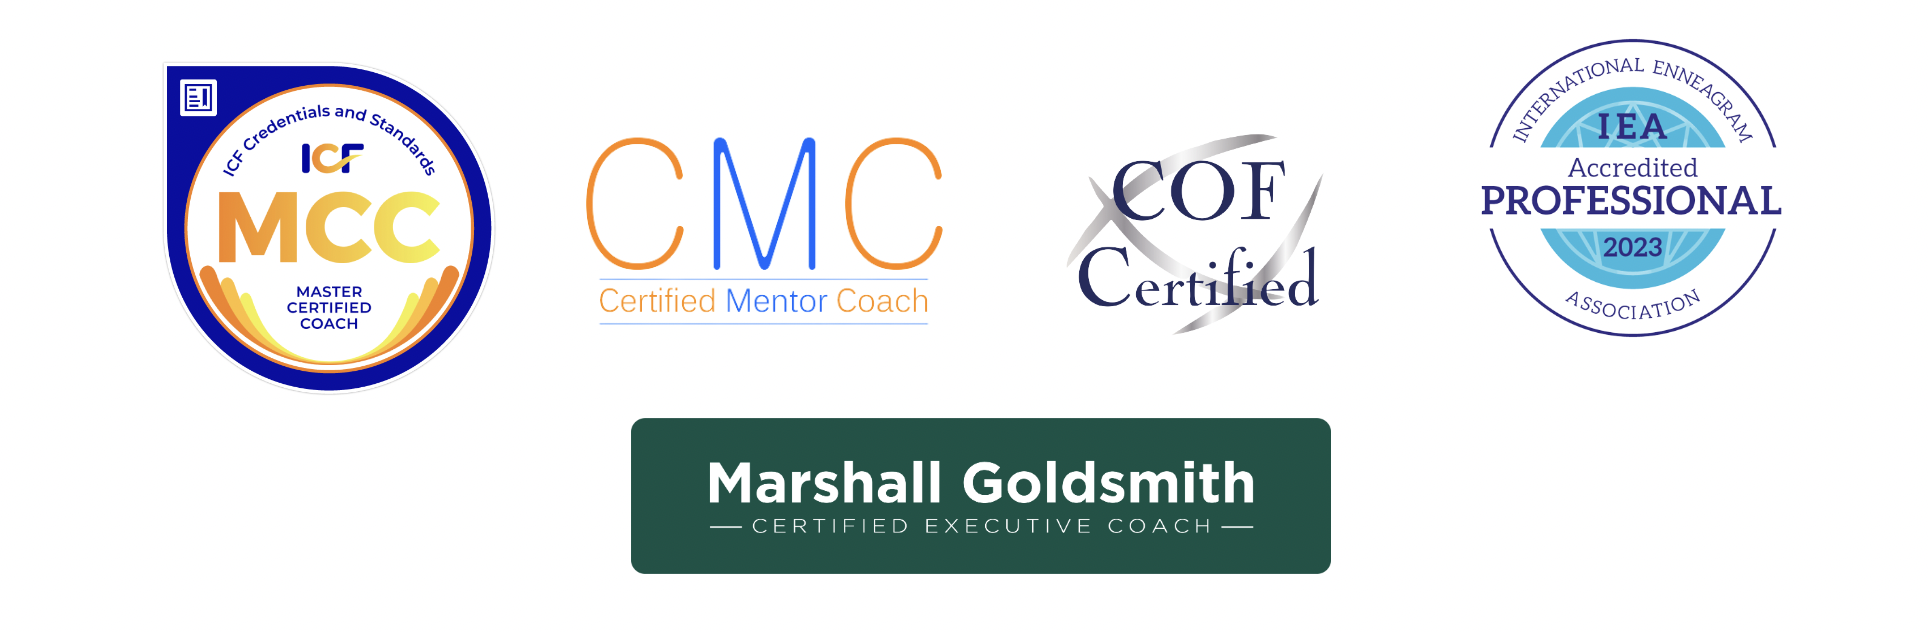 Coaching certification logos